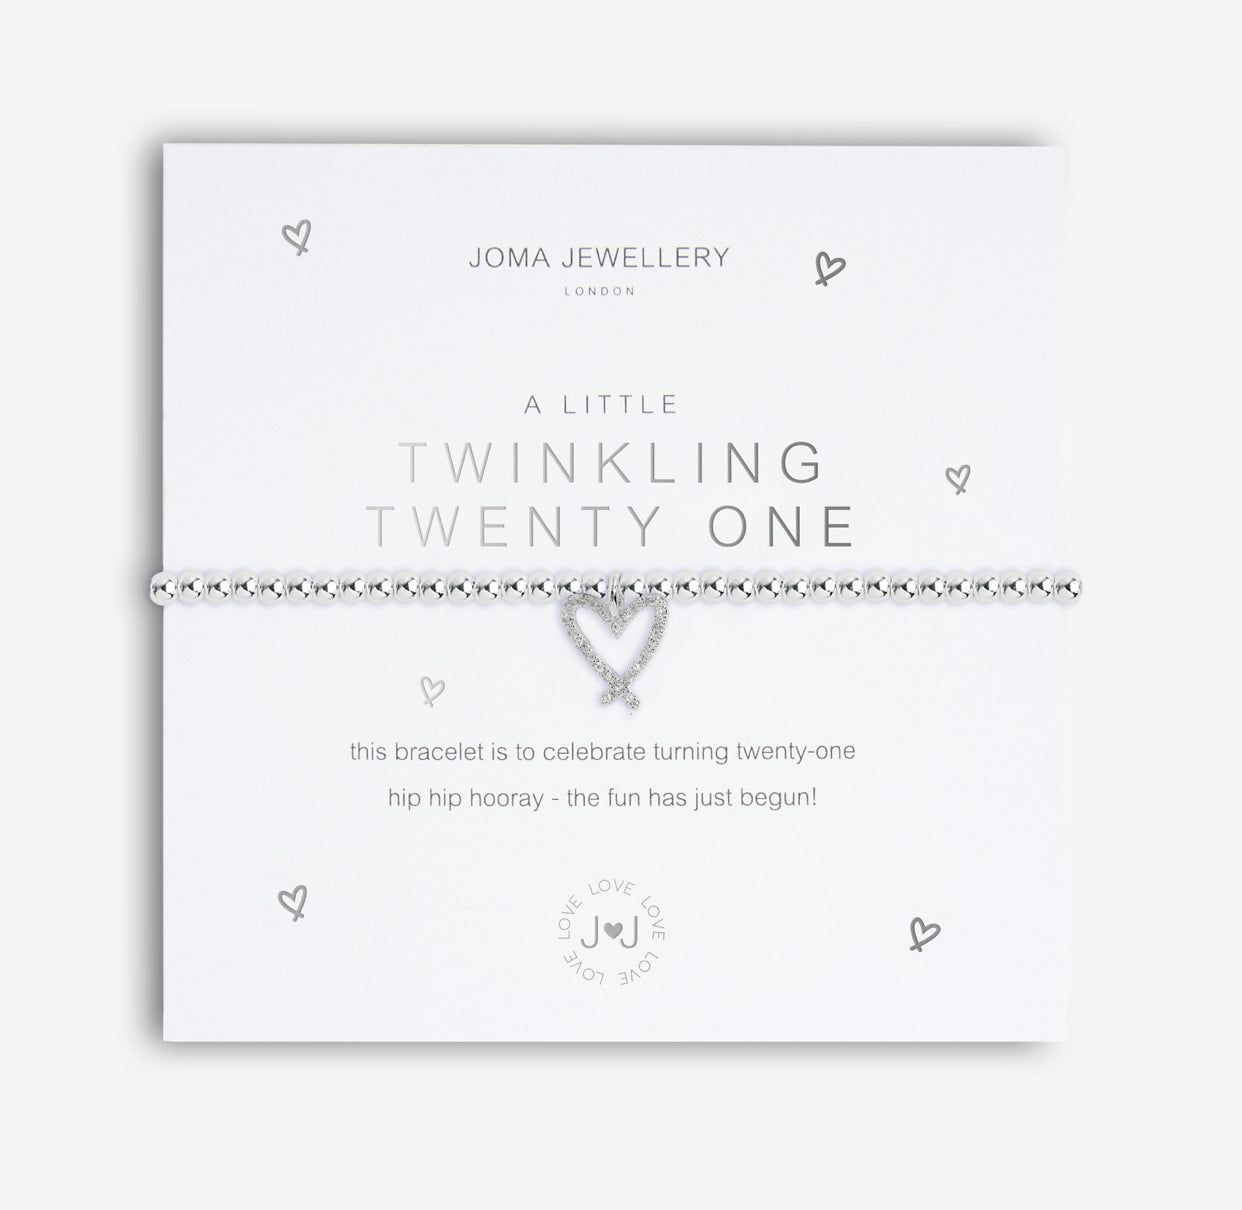 Joma Jewellery 'A Little' Twenty One